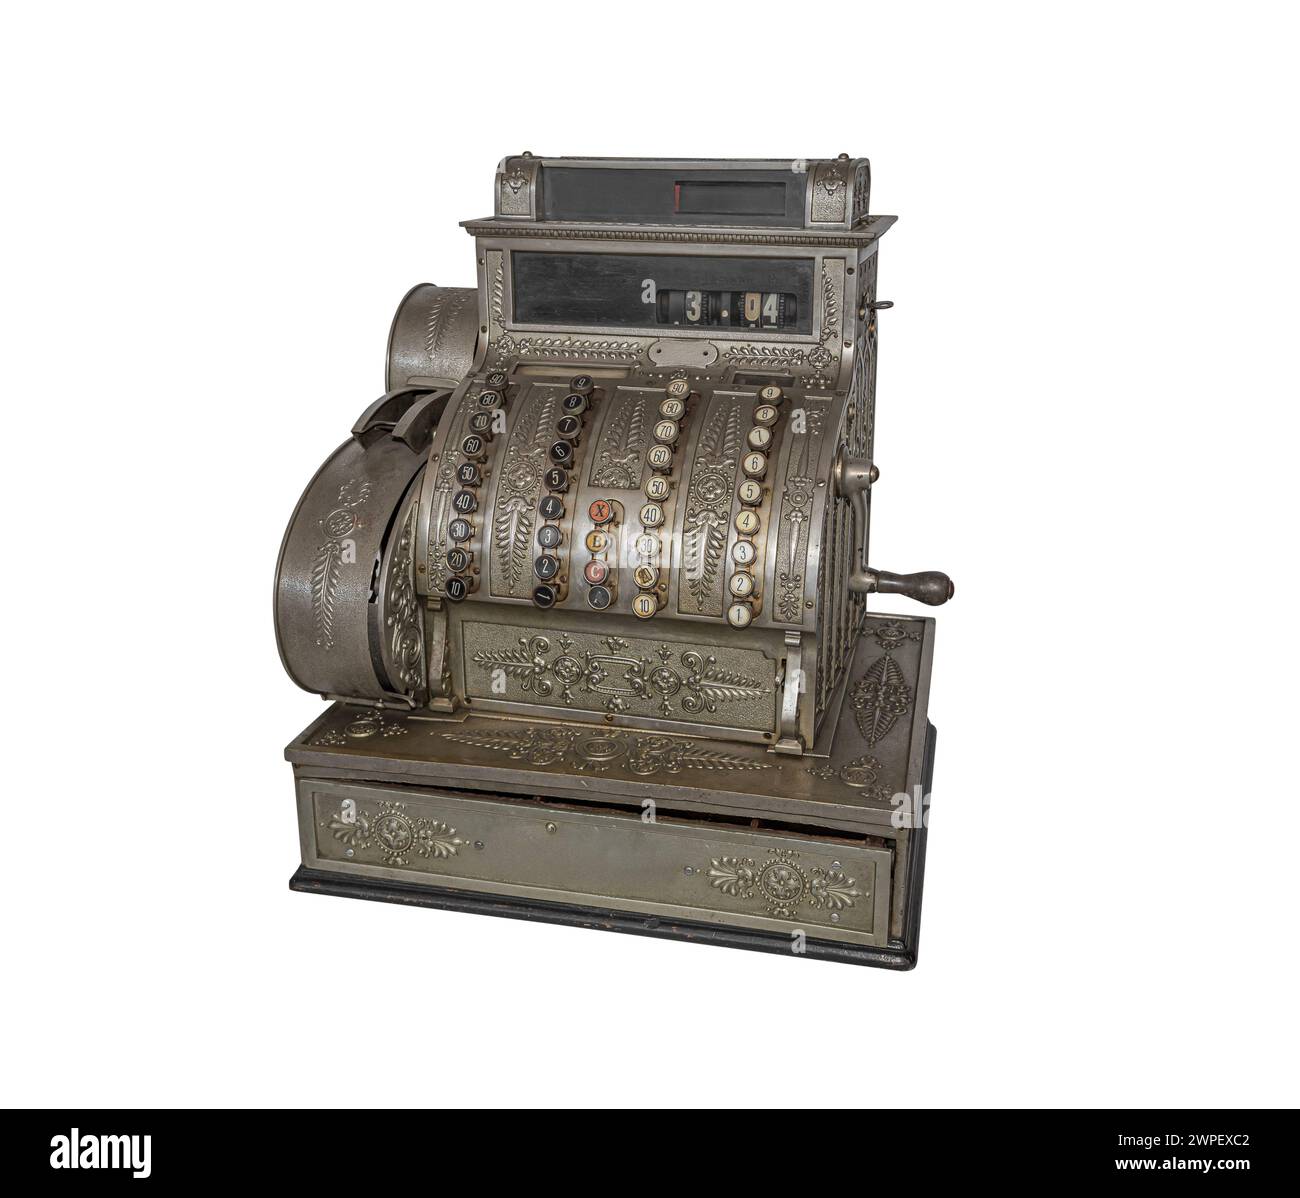 Vintage cash register isolated on white. Stock Photo